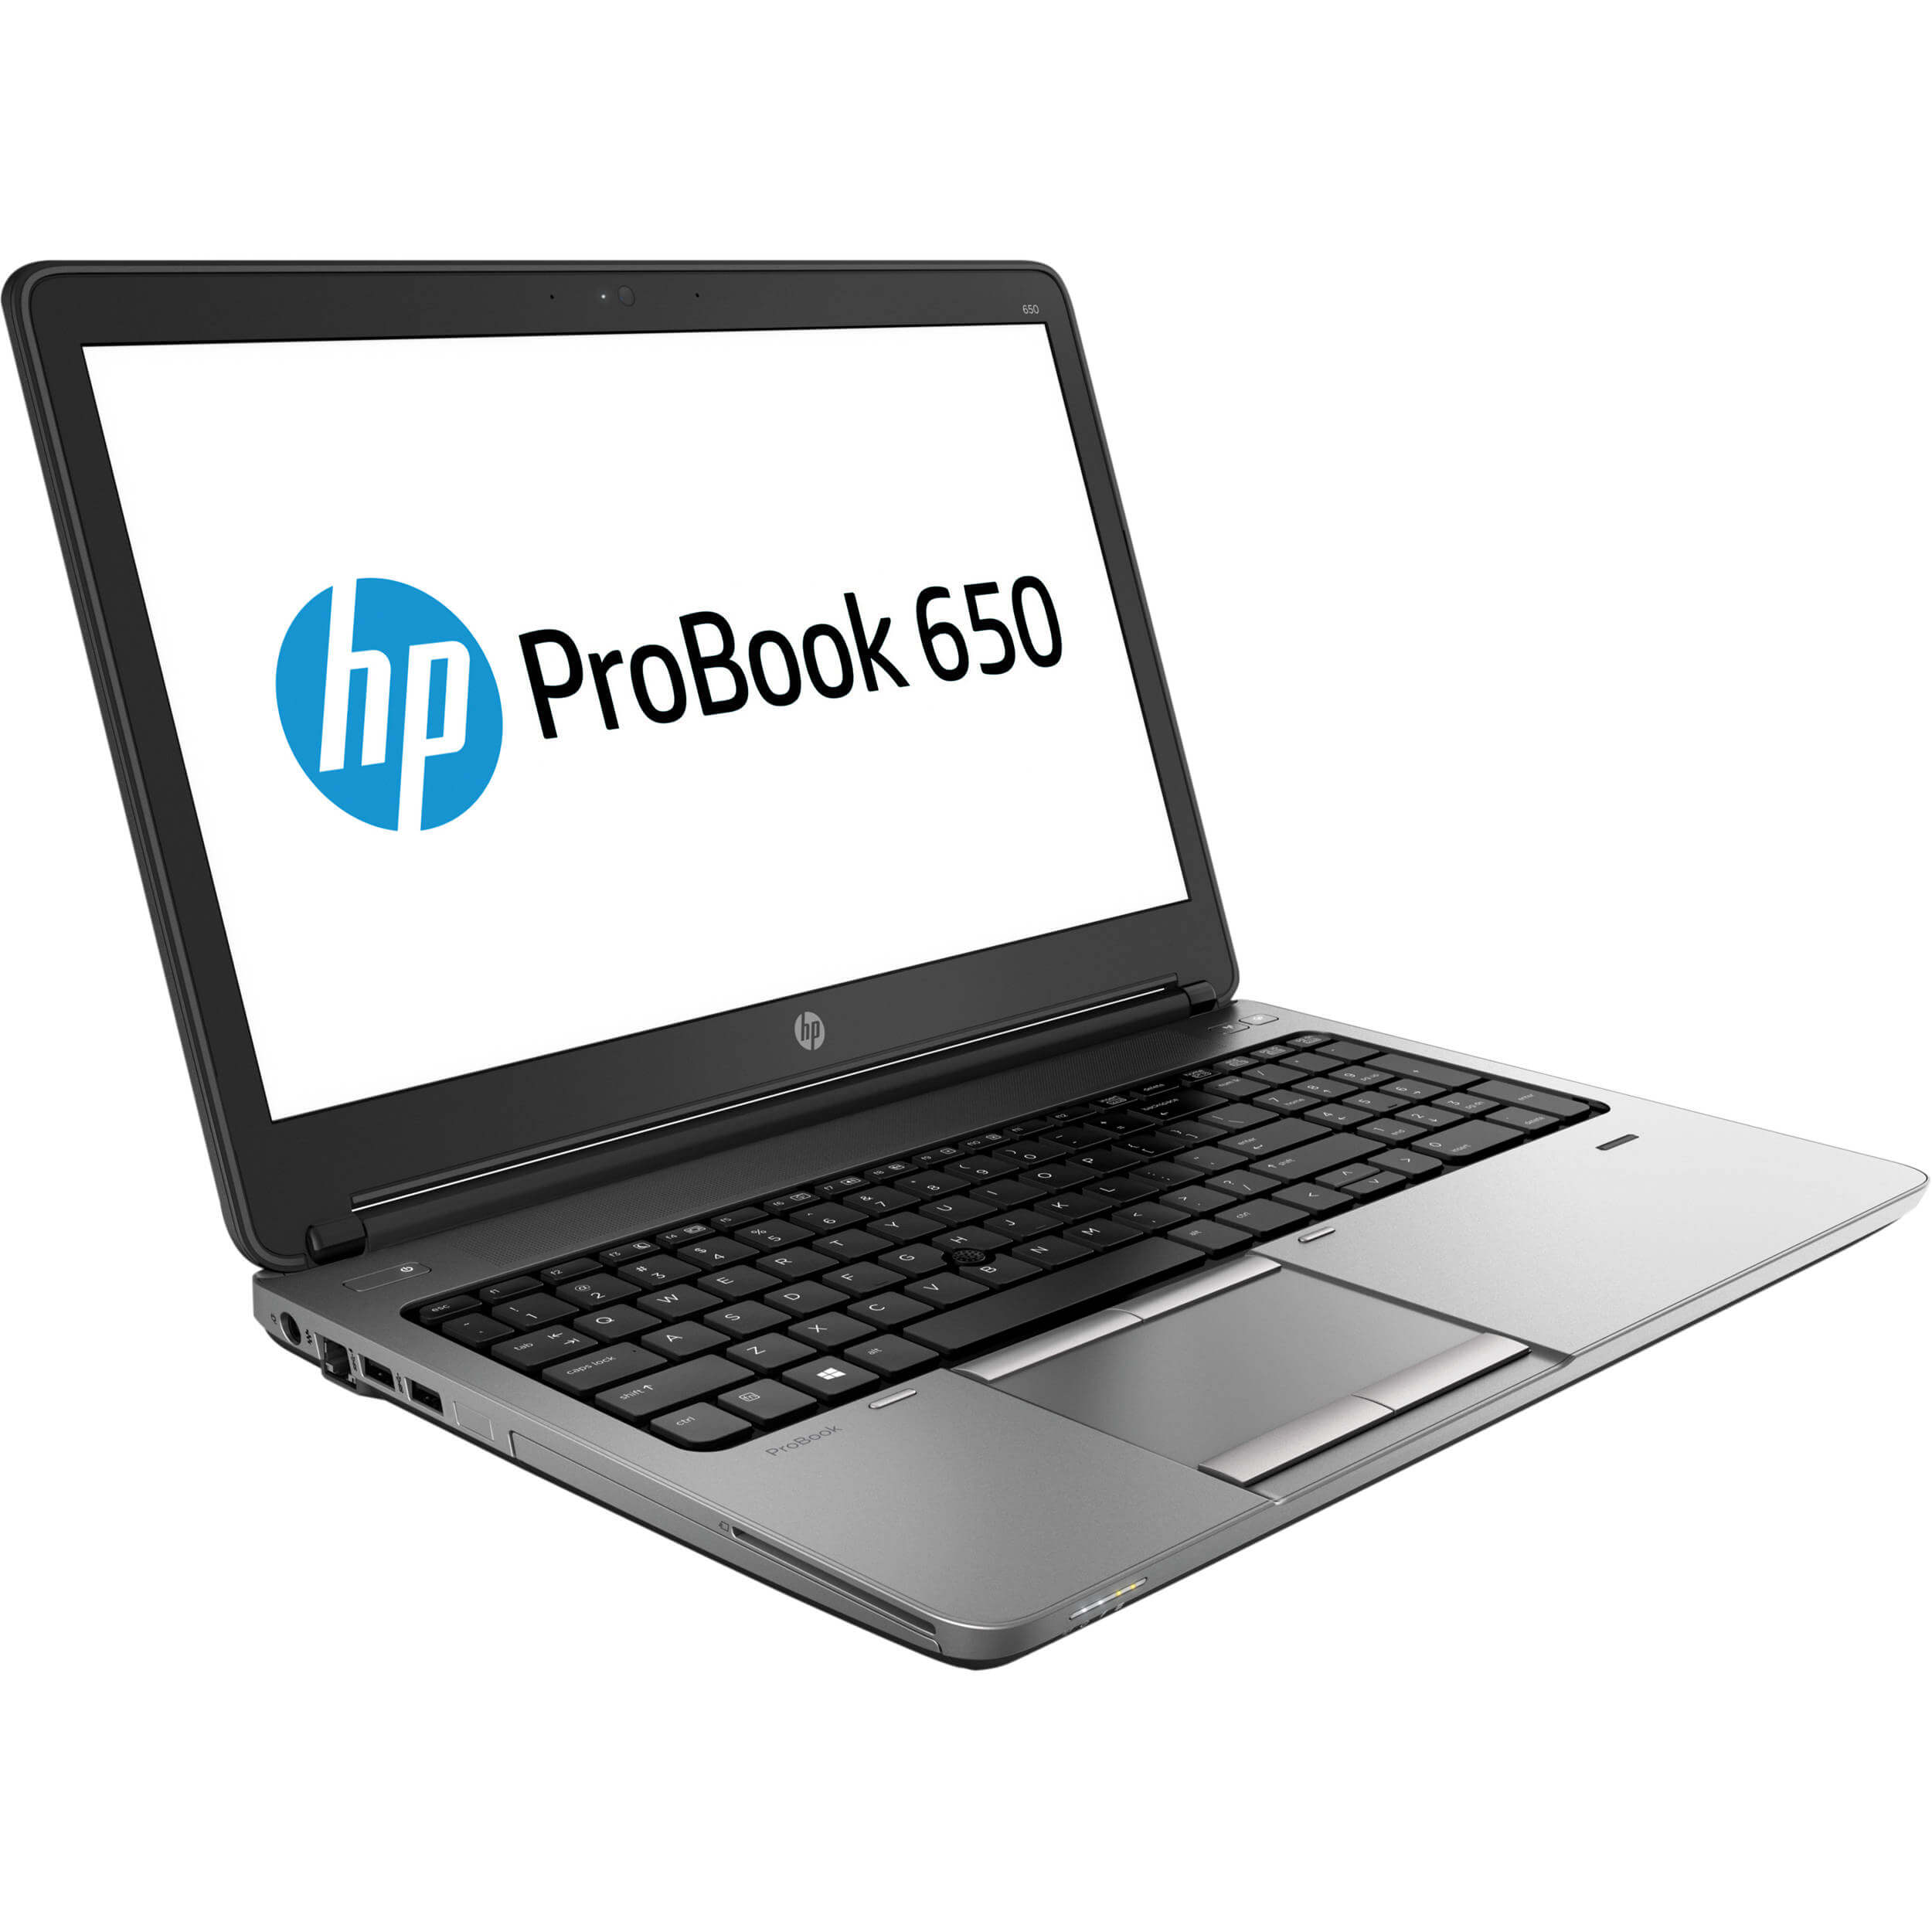 HP PROBOOK 650 G1 I5-4210M 2,6 / 4096 MB DDR3L / 256 GB SSD NOWY / DVD-RW / WINDOWS 10 PRO / 15.6